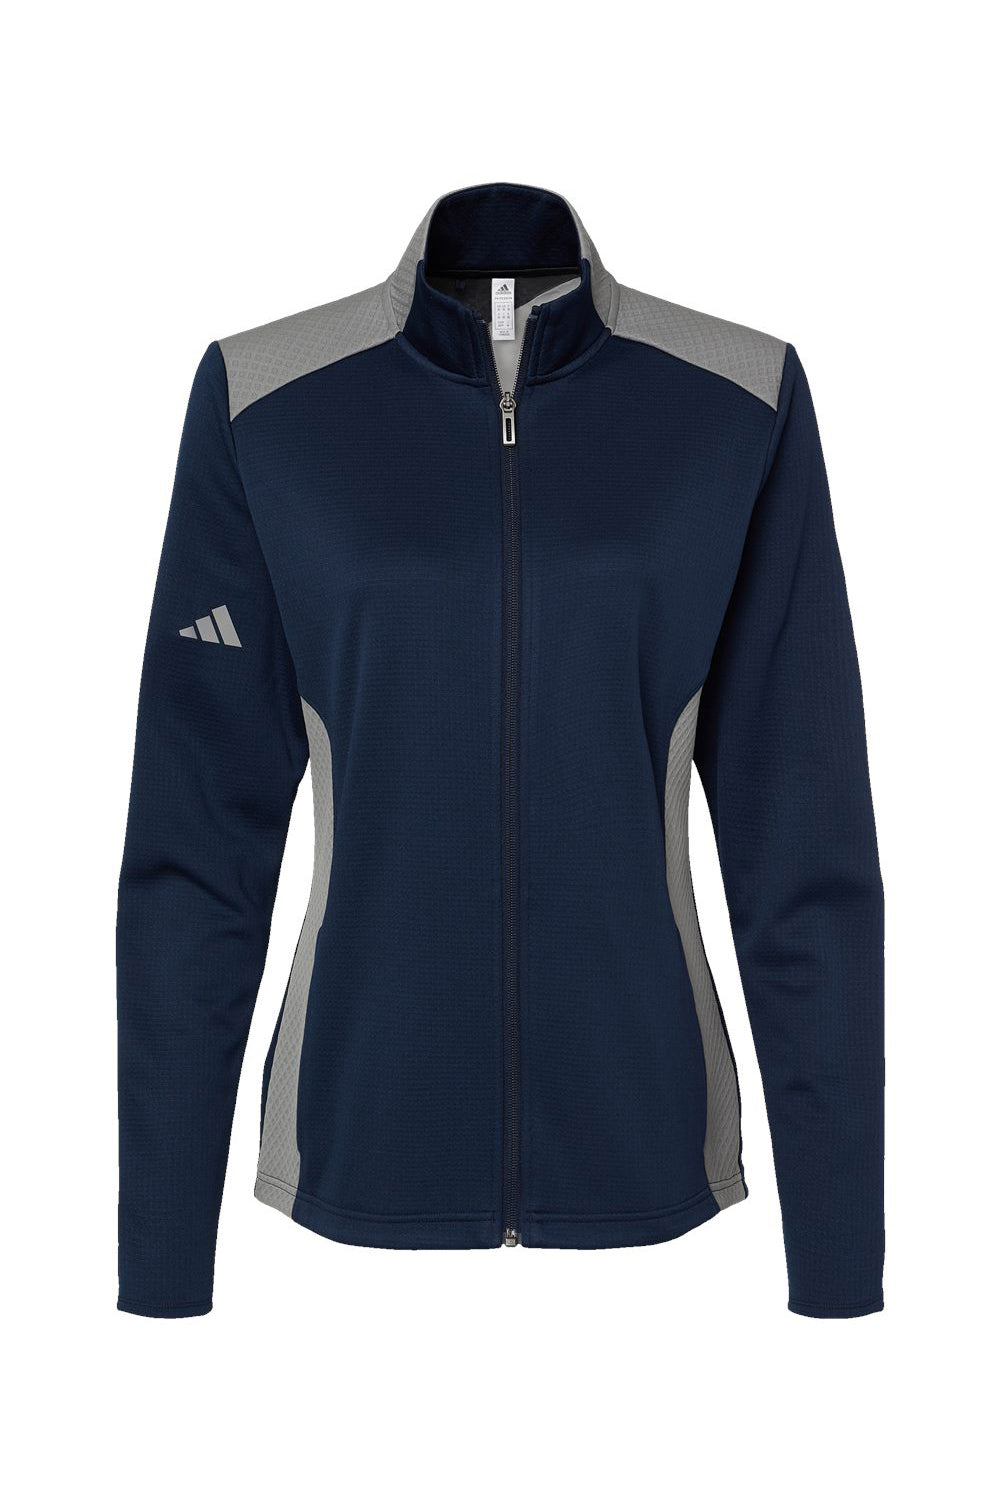 Adidas A529 Womens Textured Mixed Media Full Zip Jacket Collegiate Navy Blue/Grey Flat Front